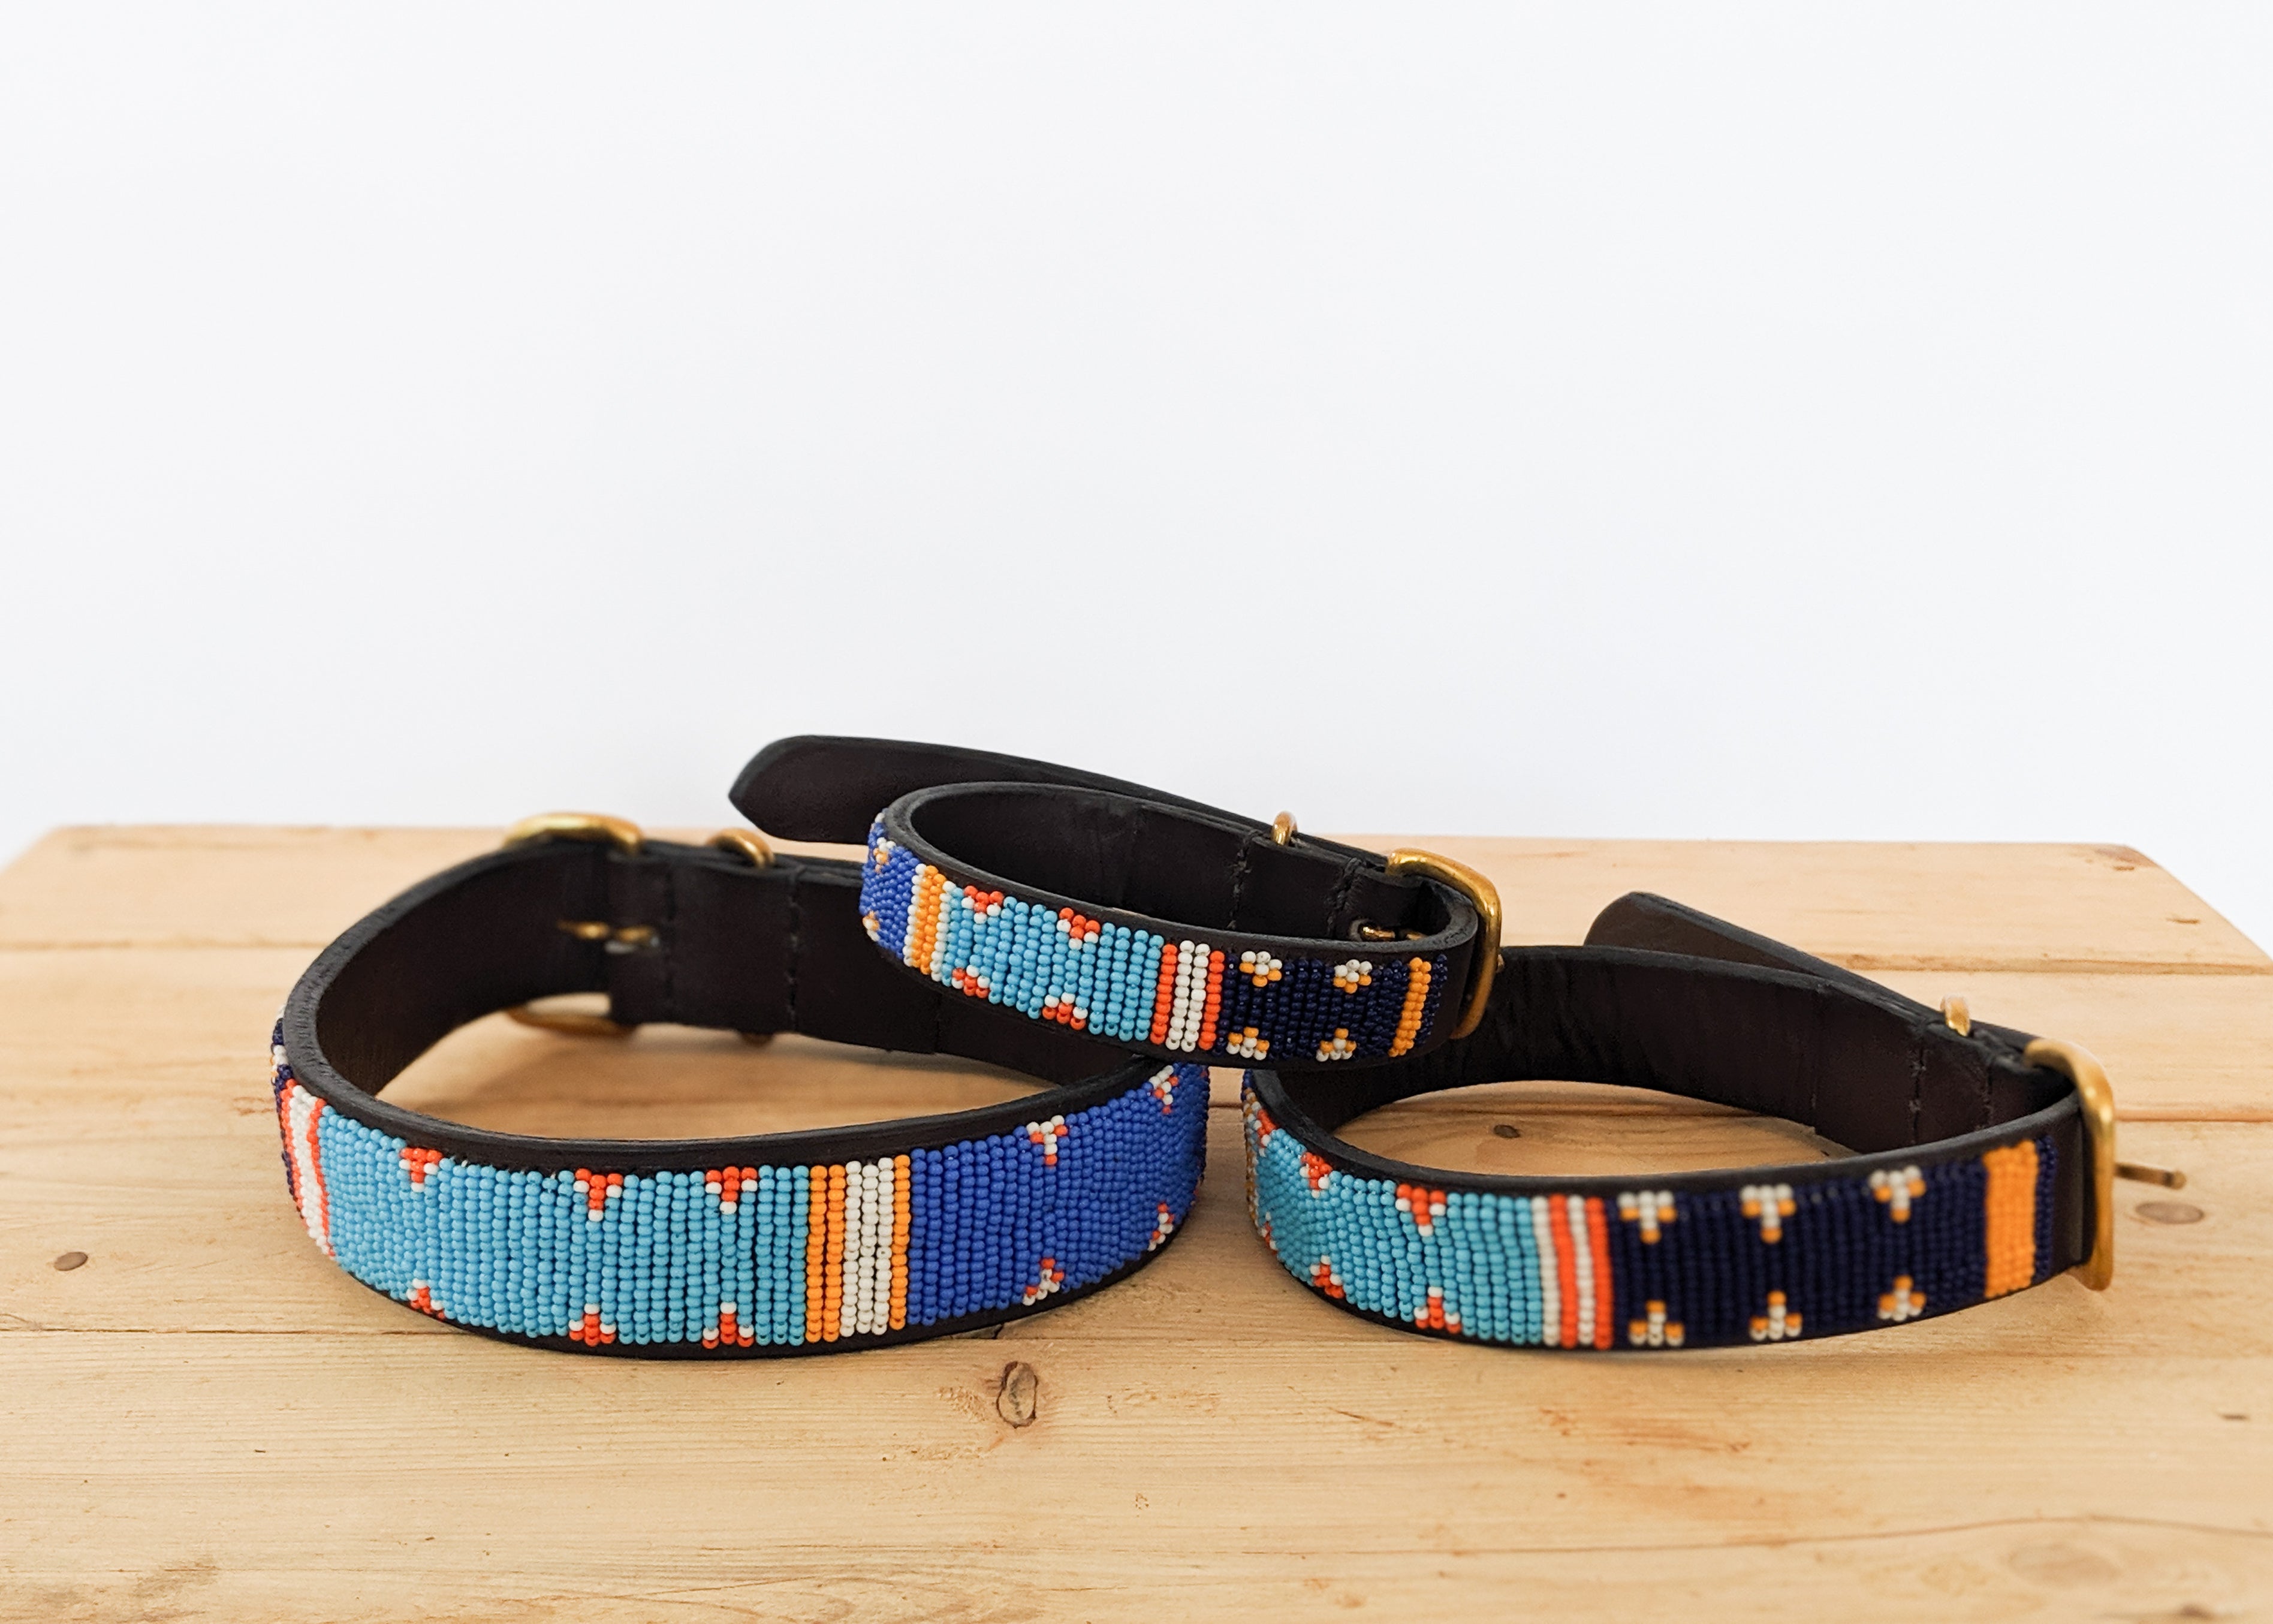 Blue, light blue, black and orange Masai beaded dog collar